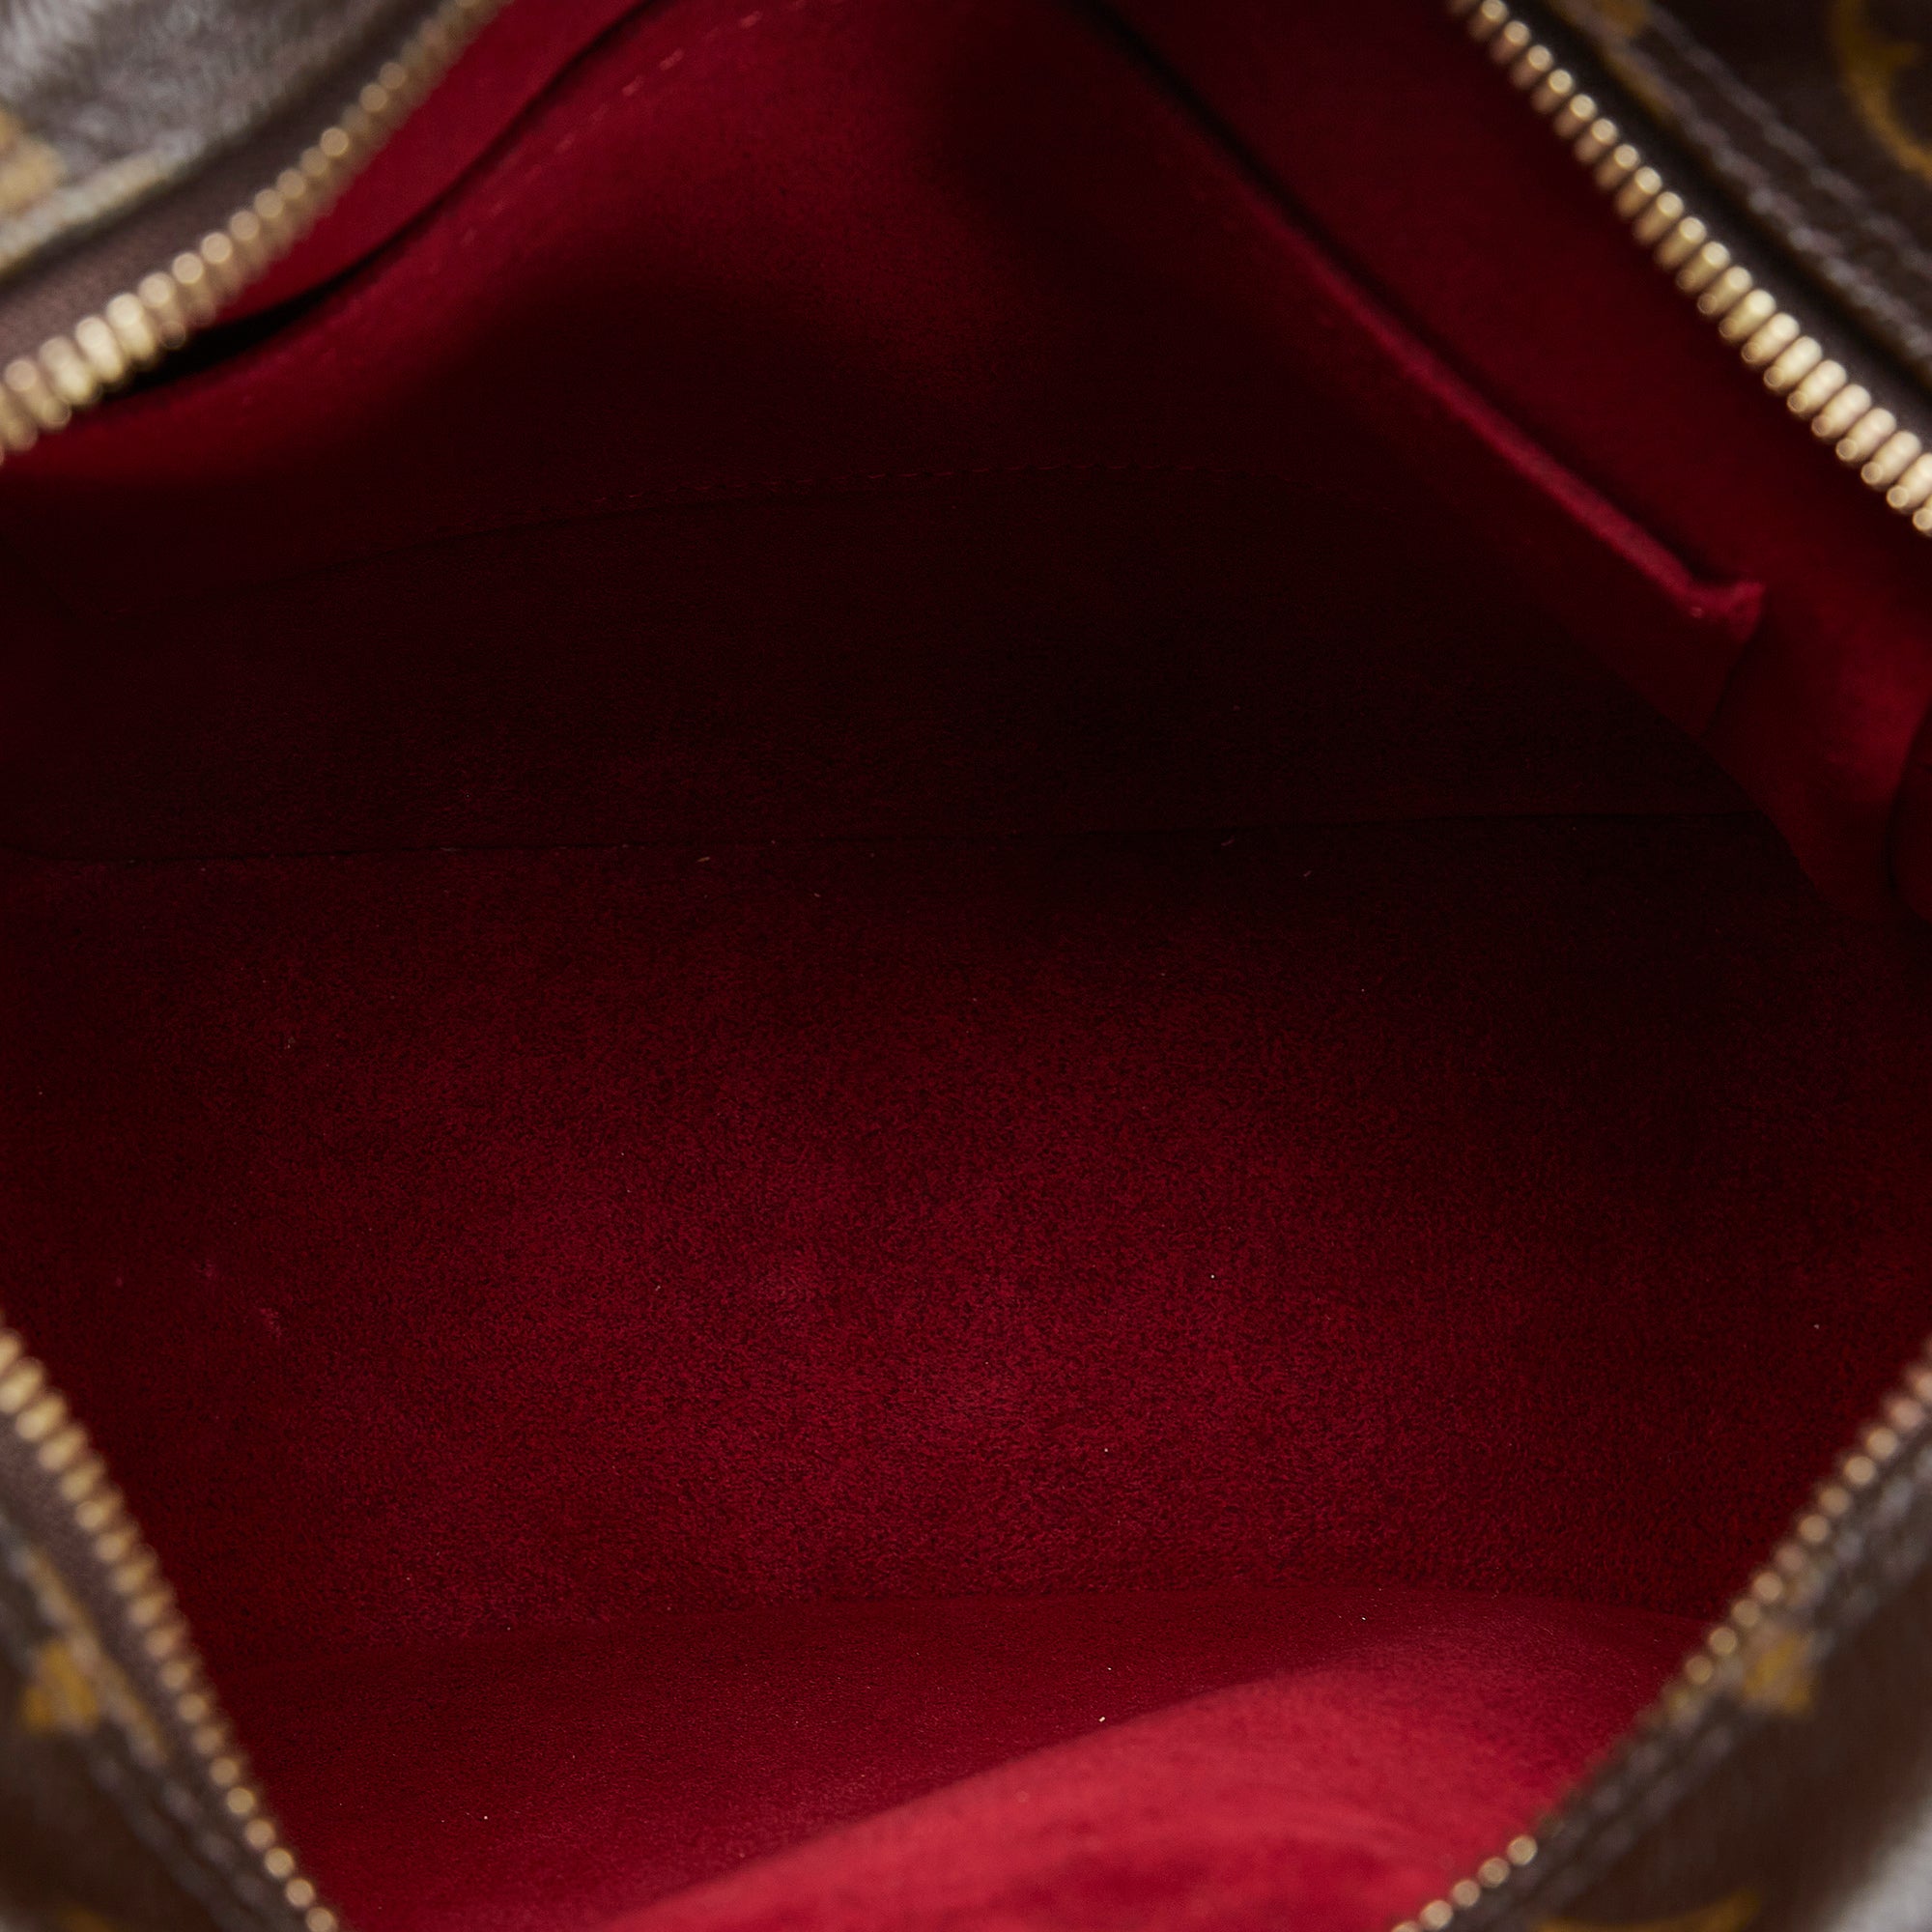 Brown Louis Vuitton Monogram Excentri-Cite Handbag